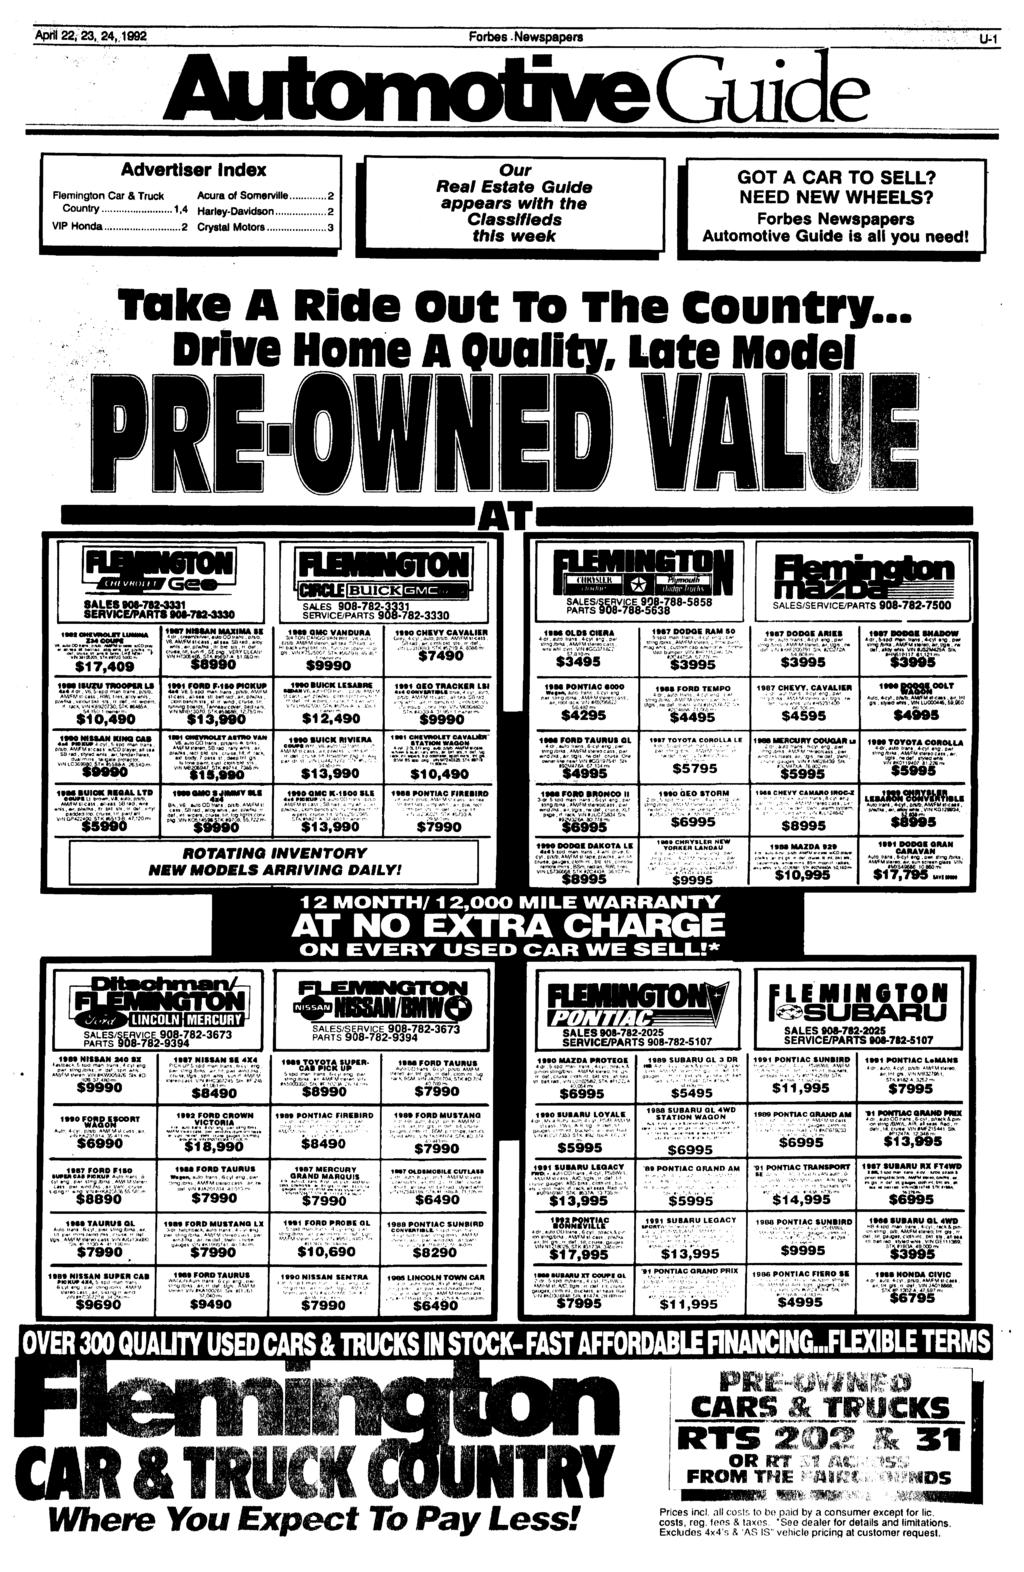 IL April 22, 23, 24,1992 Forbes Newspapers U-1 Guide Advertiser Index Remington Car & Truck Acura of SomervHI 2 Country 1,4 Harley-Davidson 2 VIP Honda.